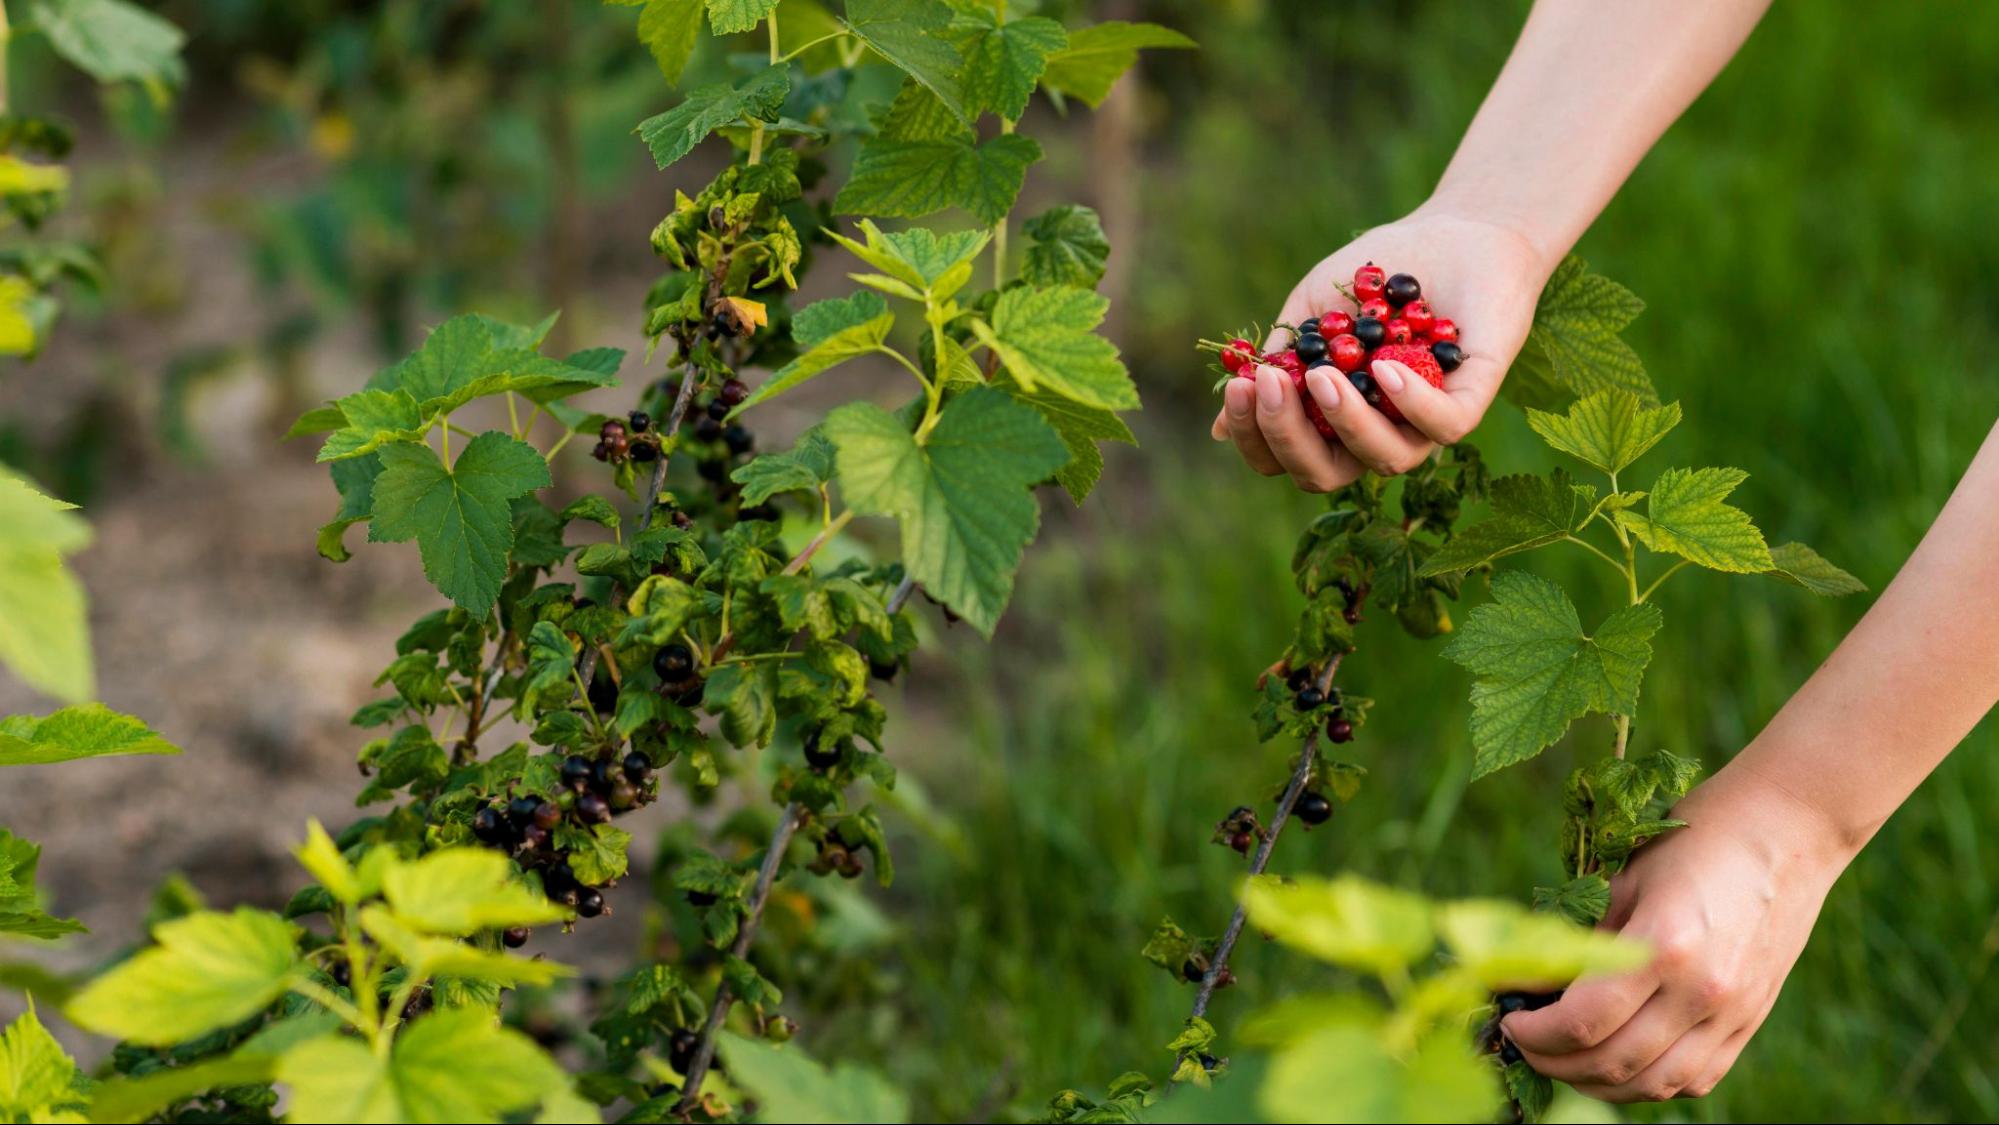 Coffee cherry-picking: Selective Picking vs. Strip Picking